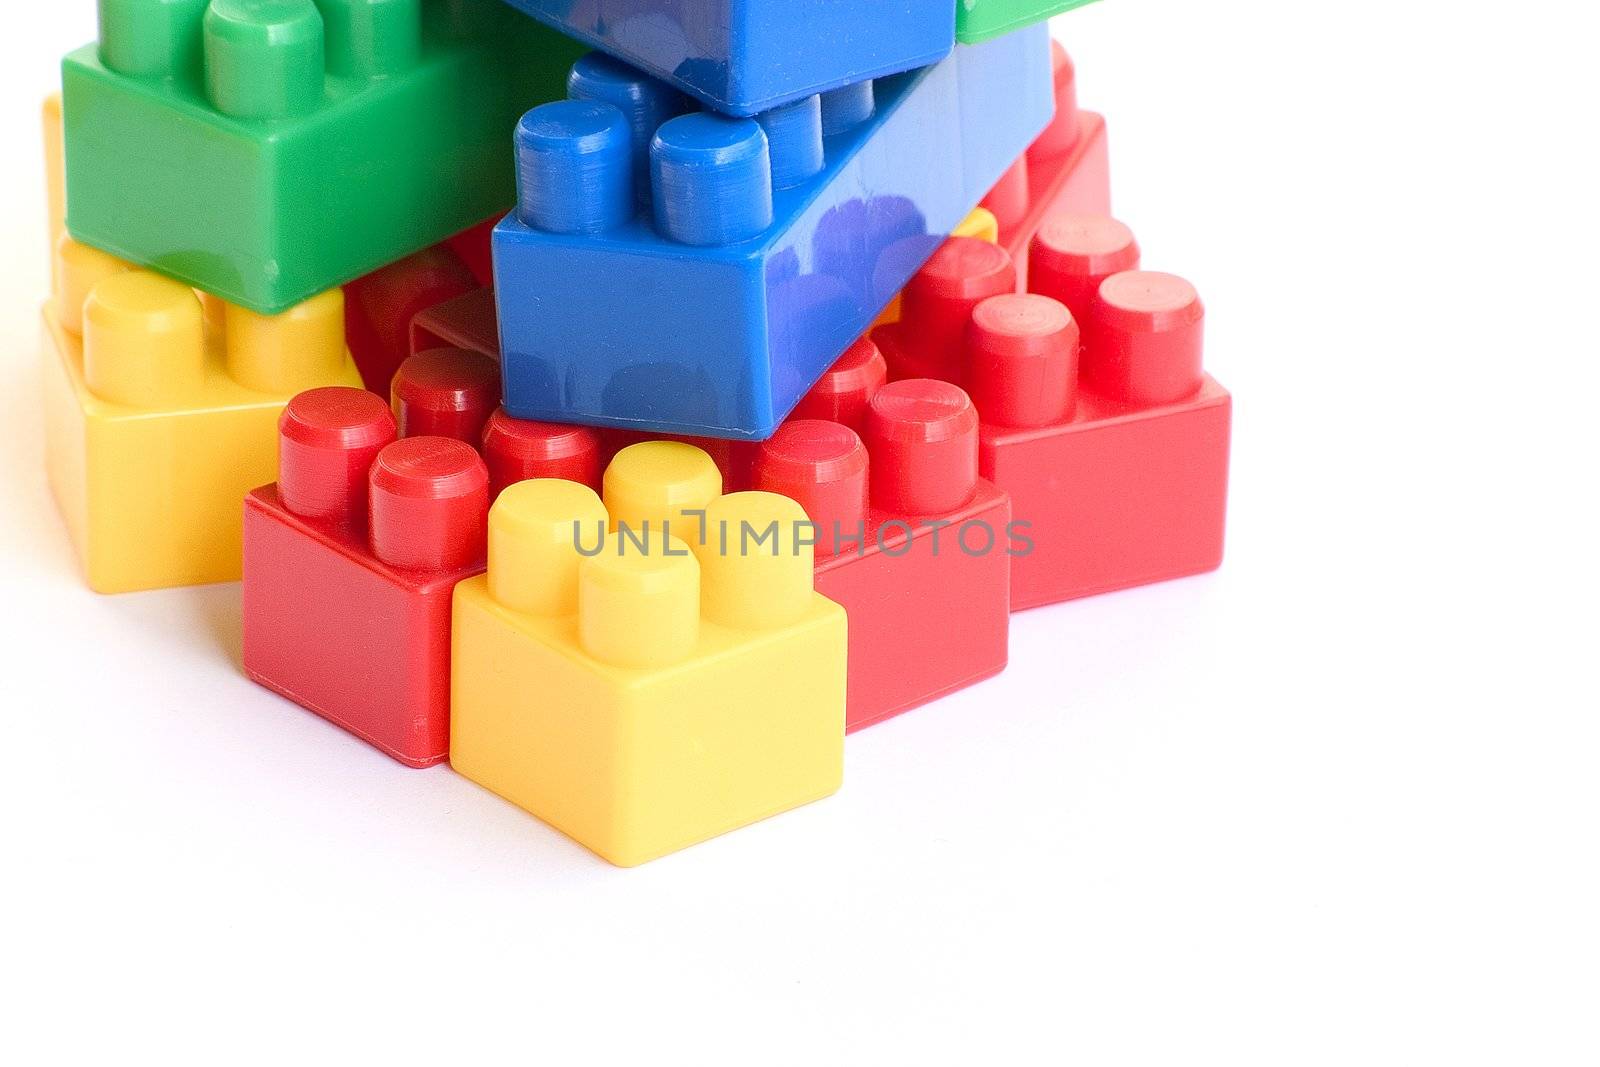 colored blocks by miradrozdowski